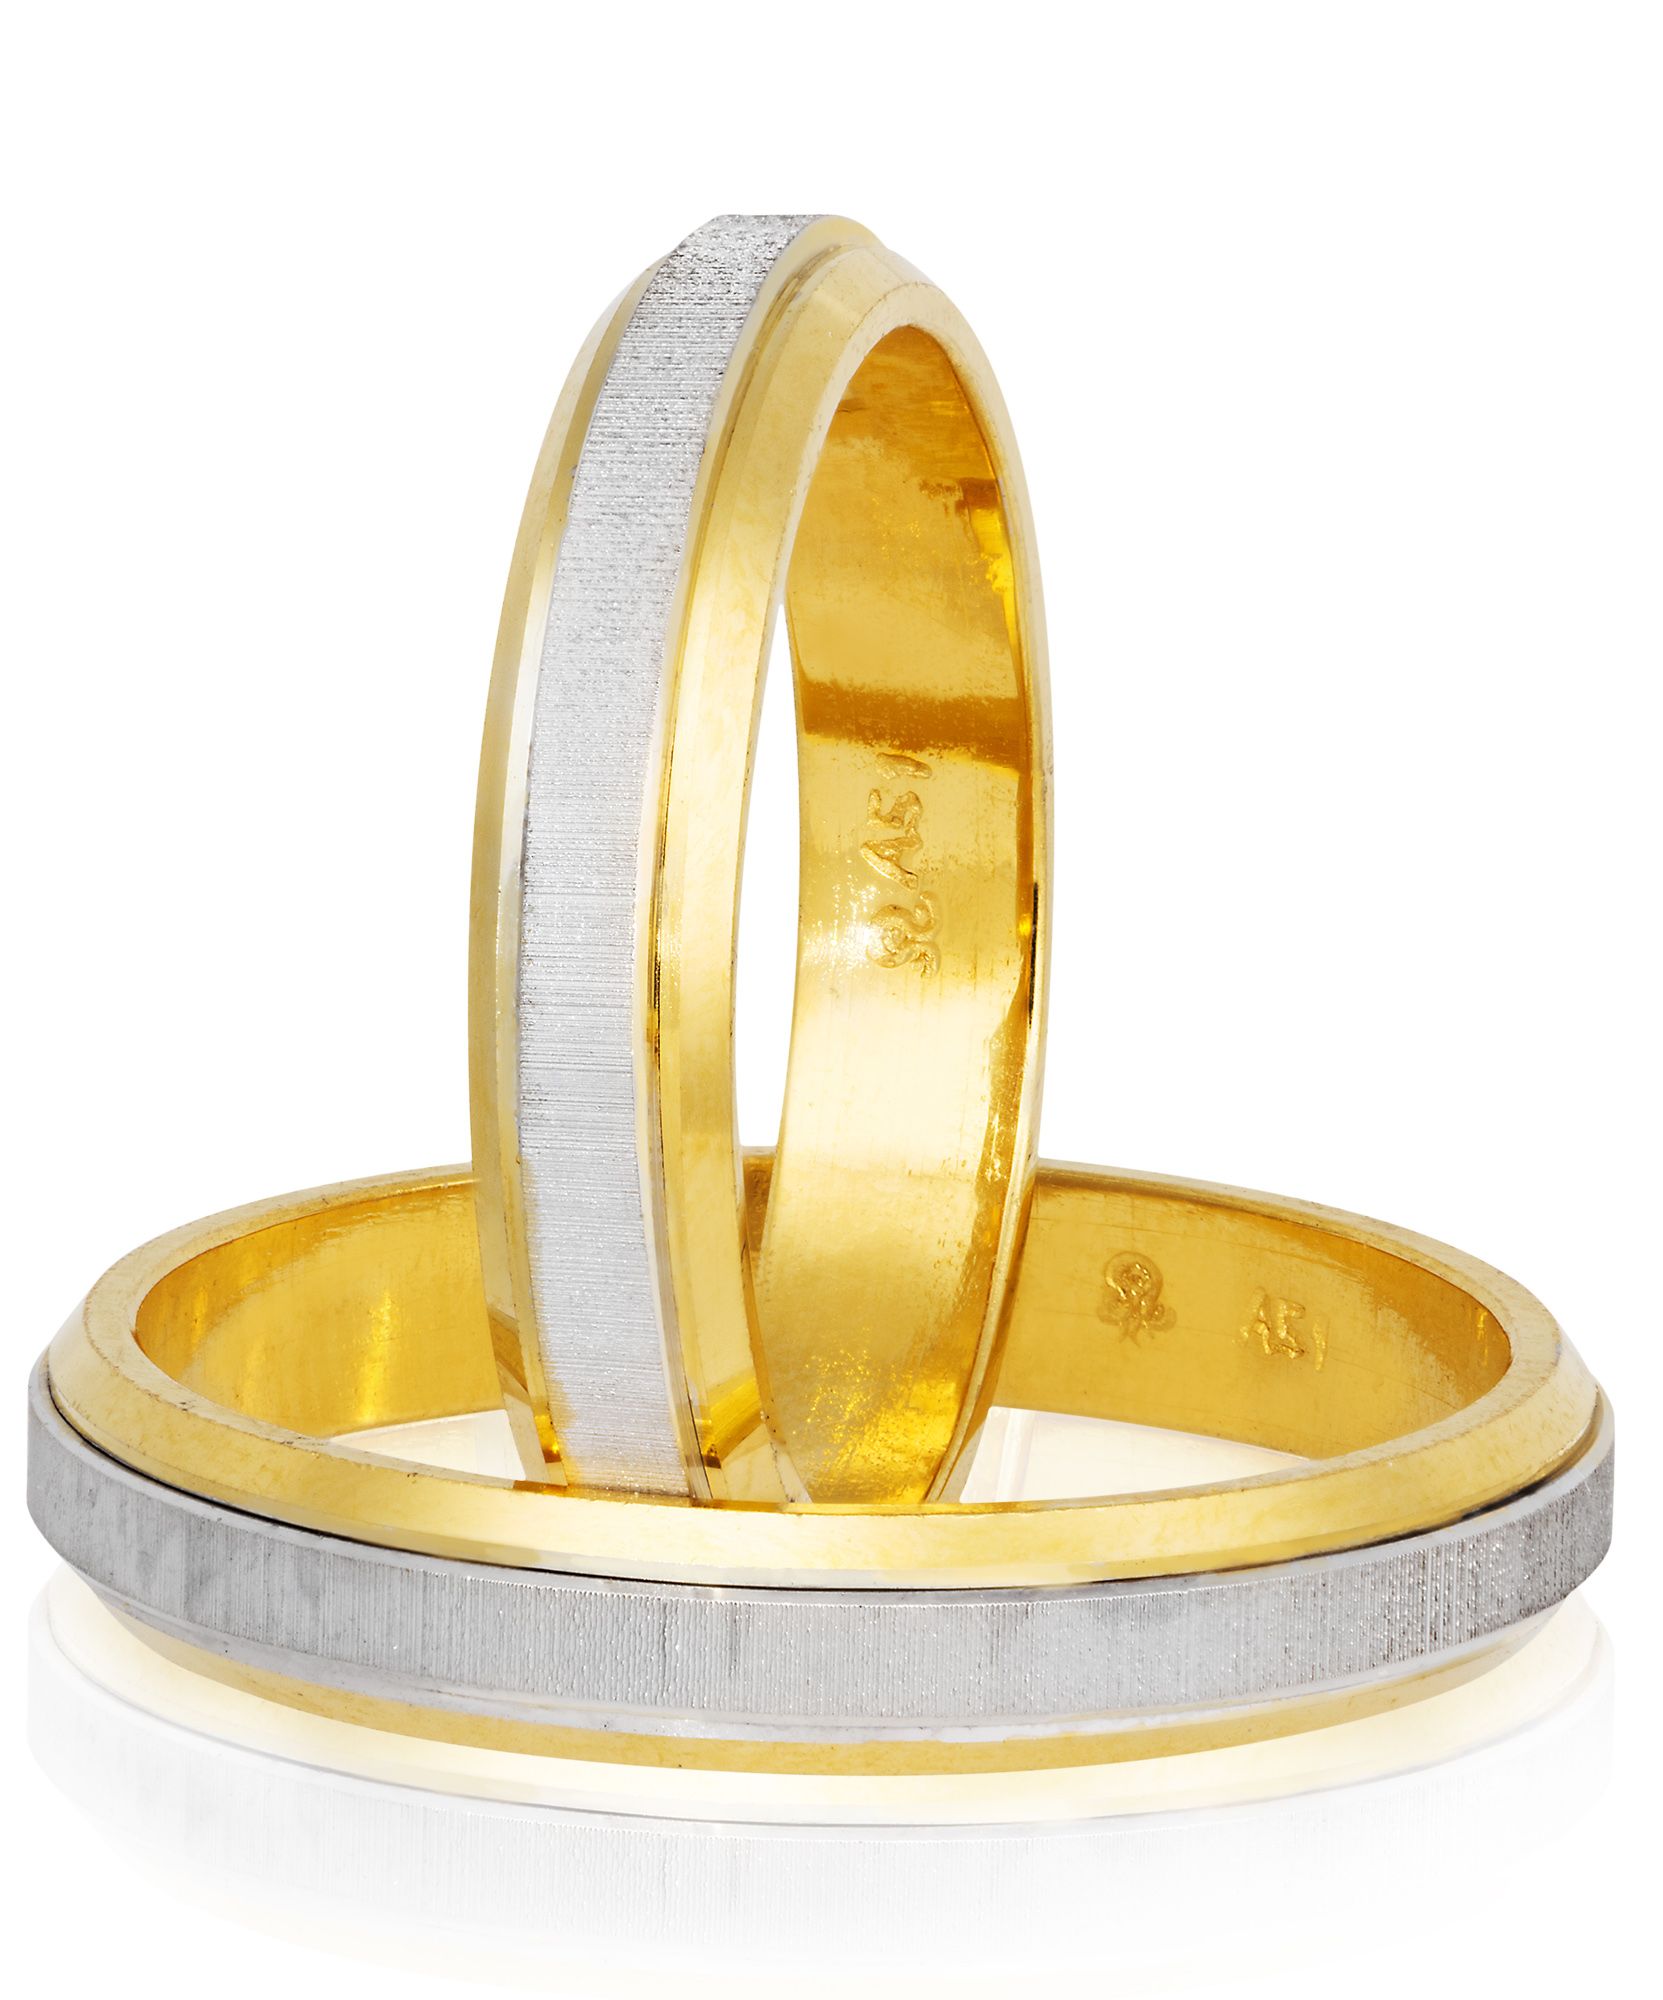 White gold & gold wedding rings 4mm (code S75)